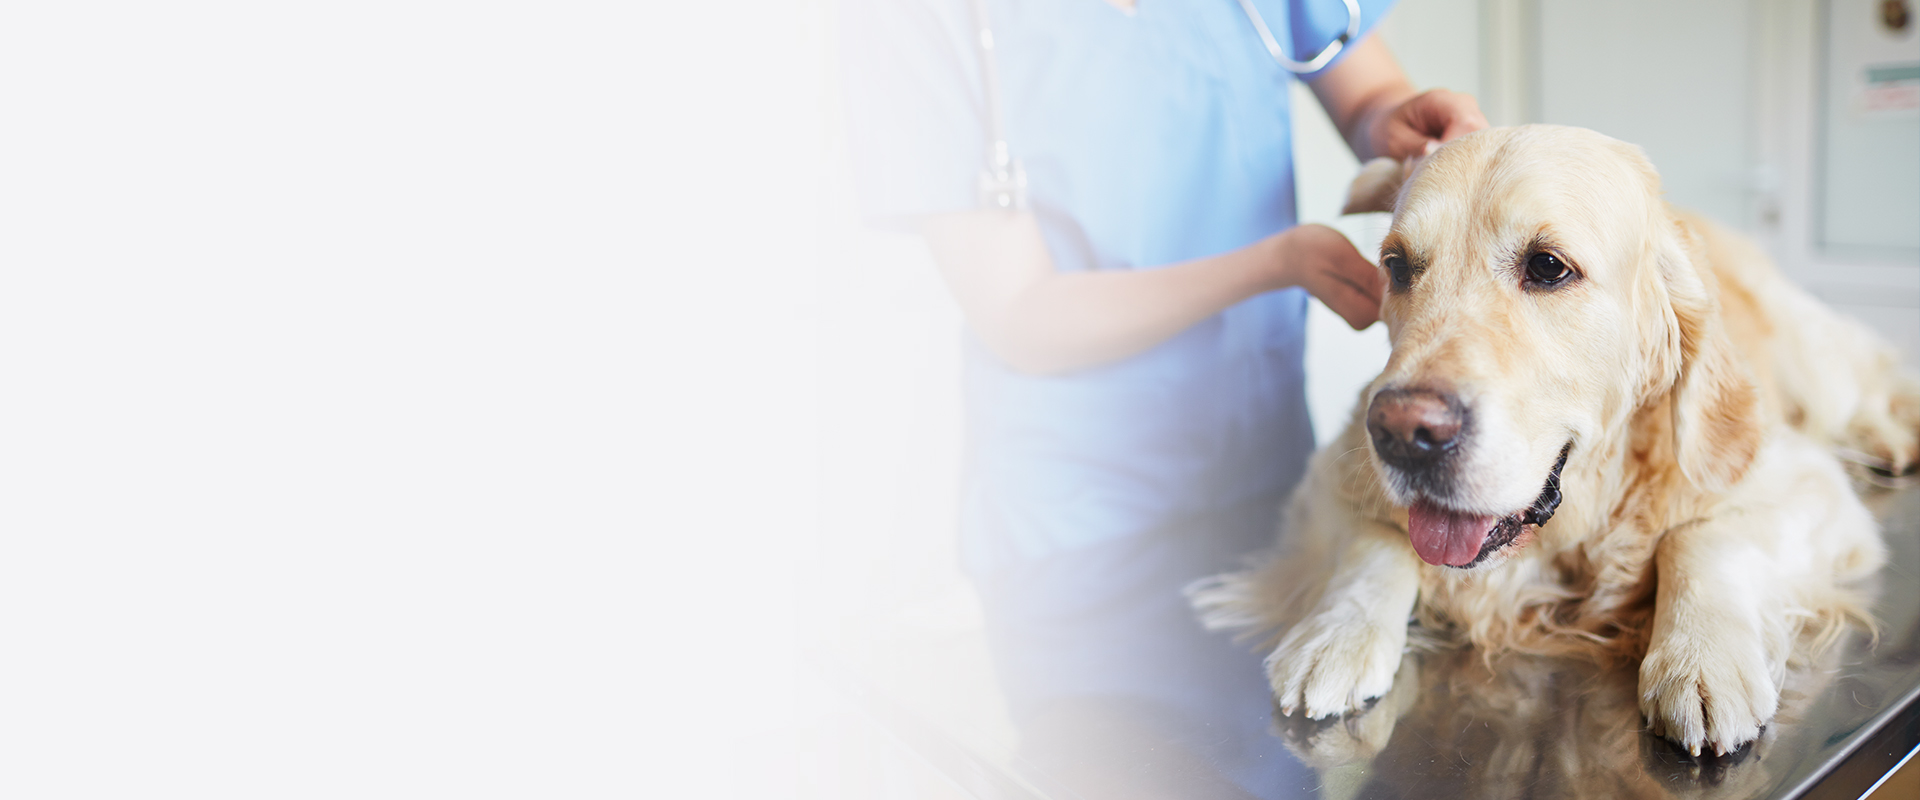 veterinario revisando perro golden retriever